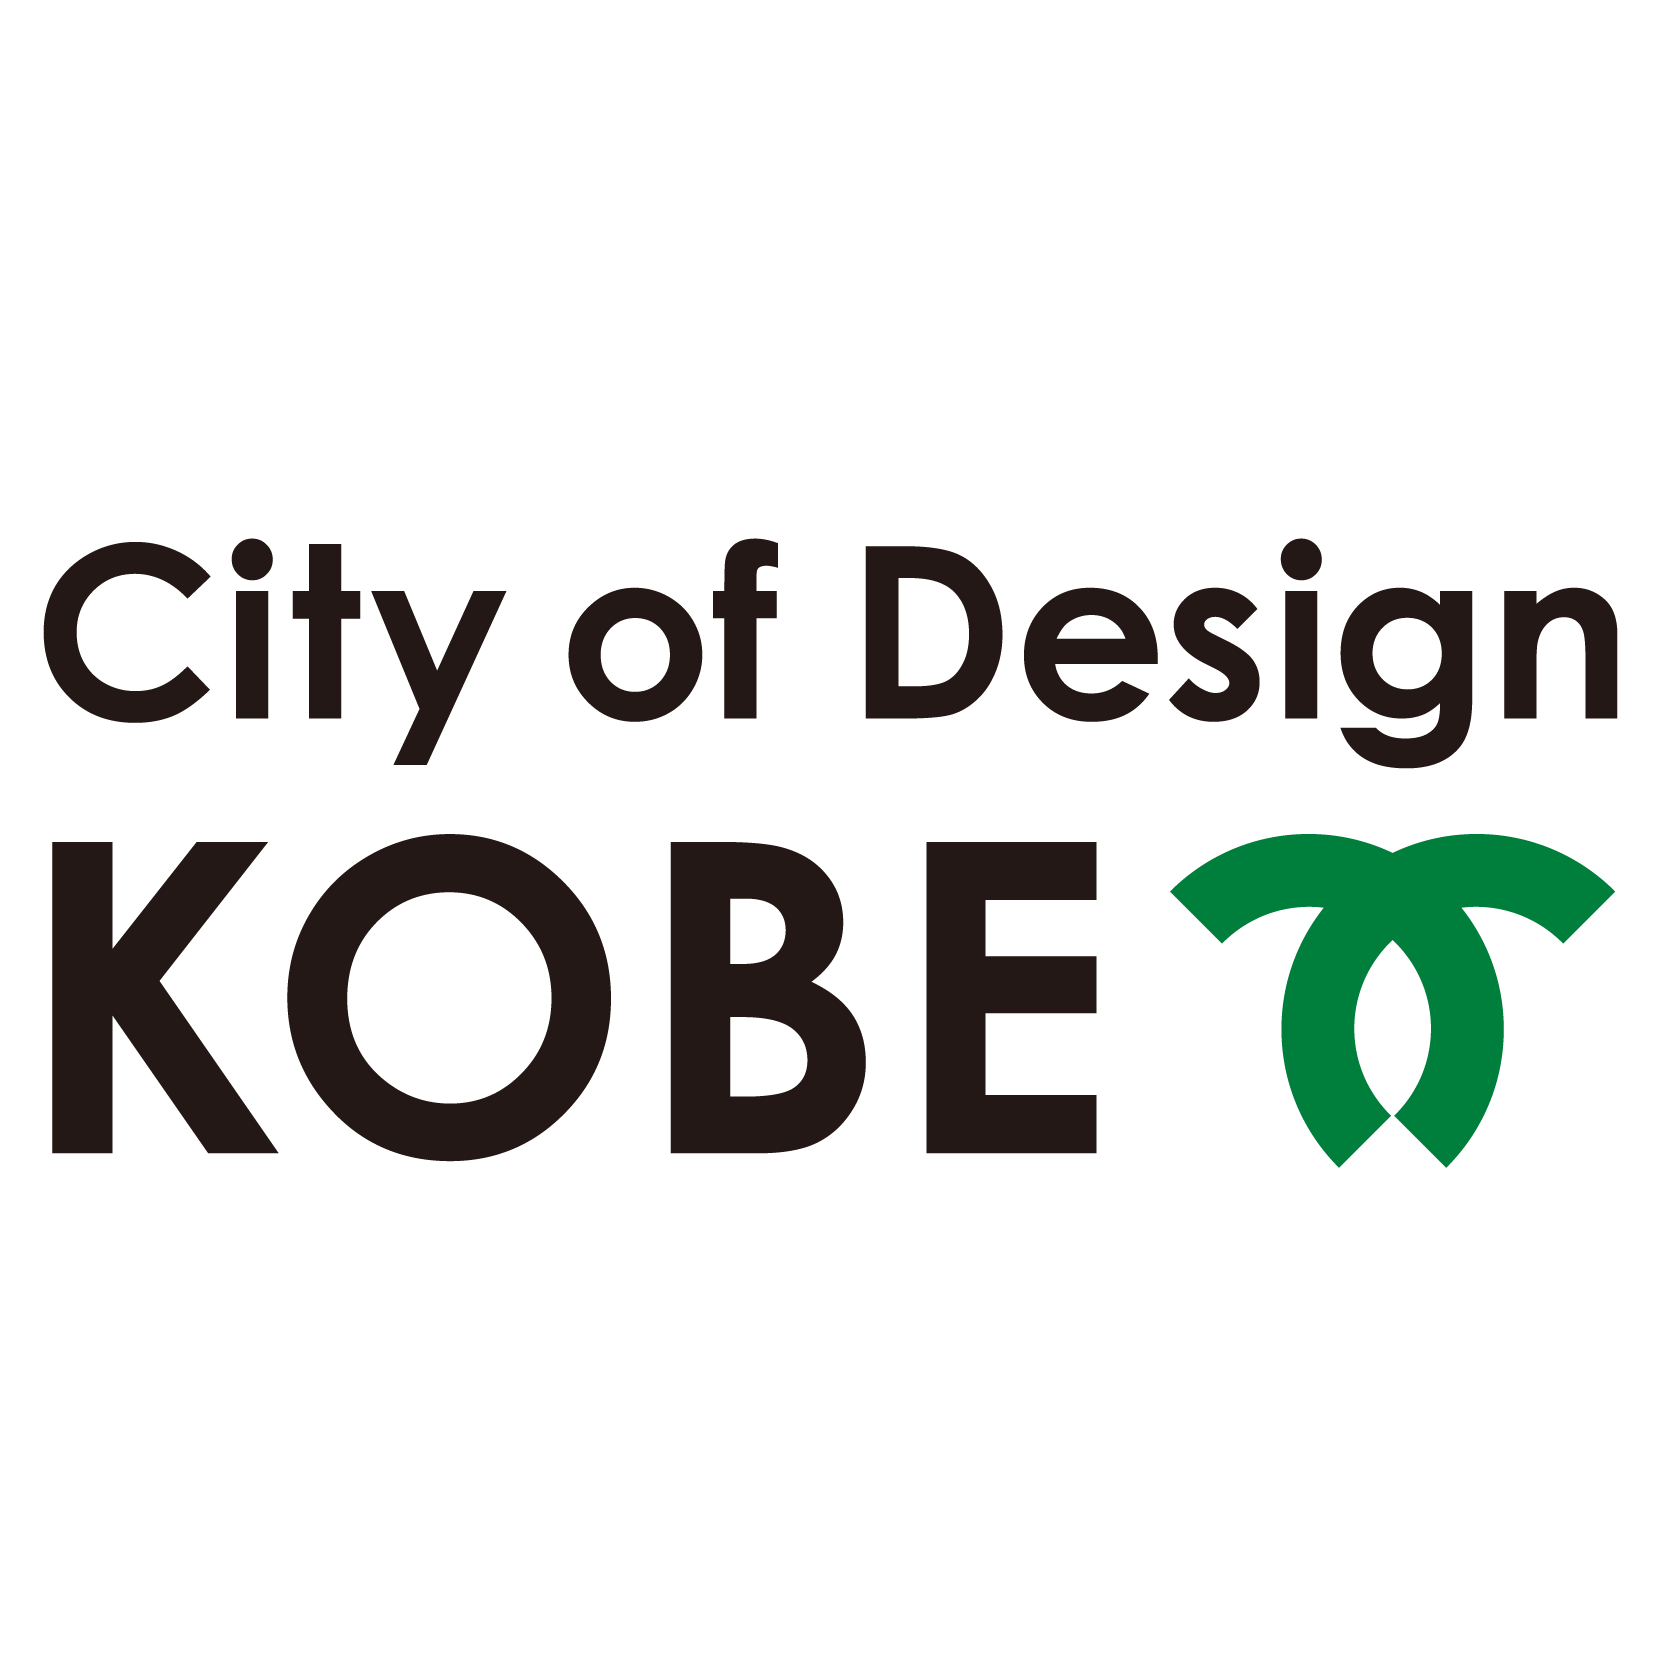 Kobe, City of Design